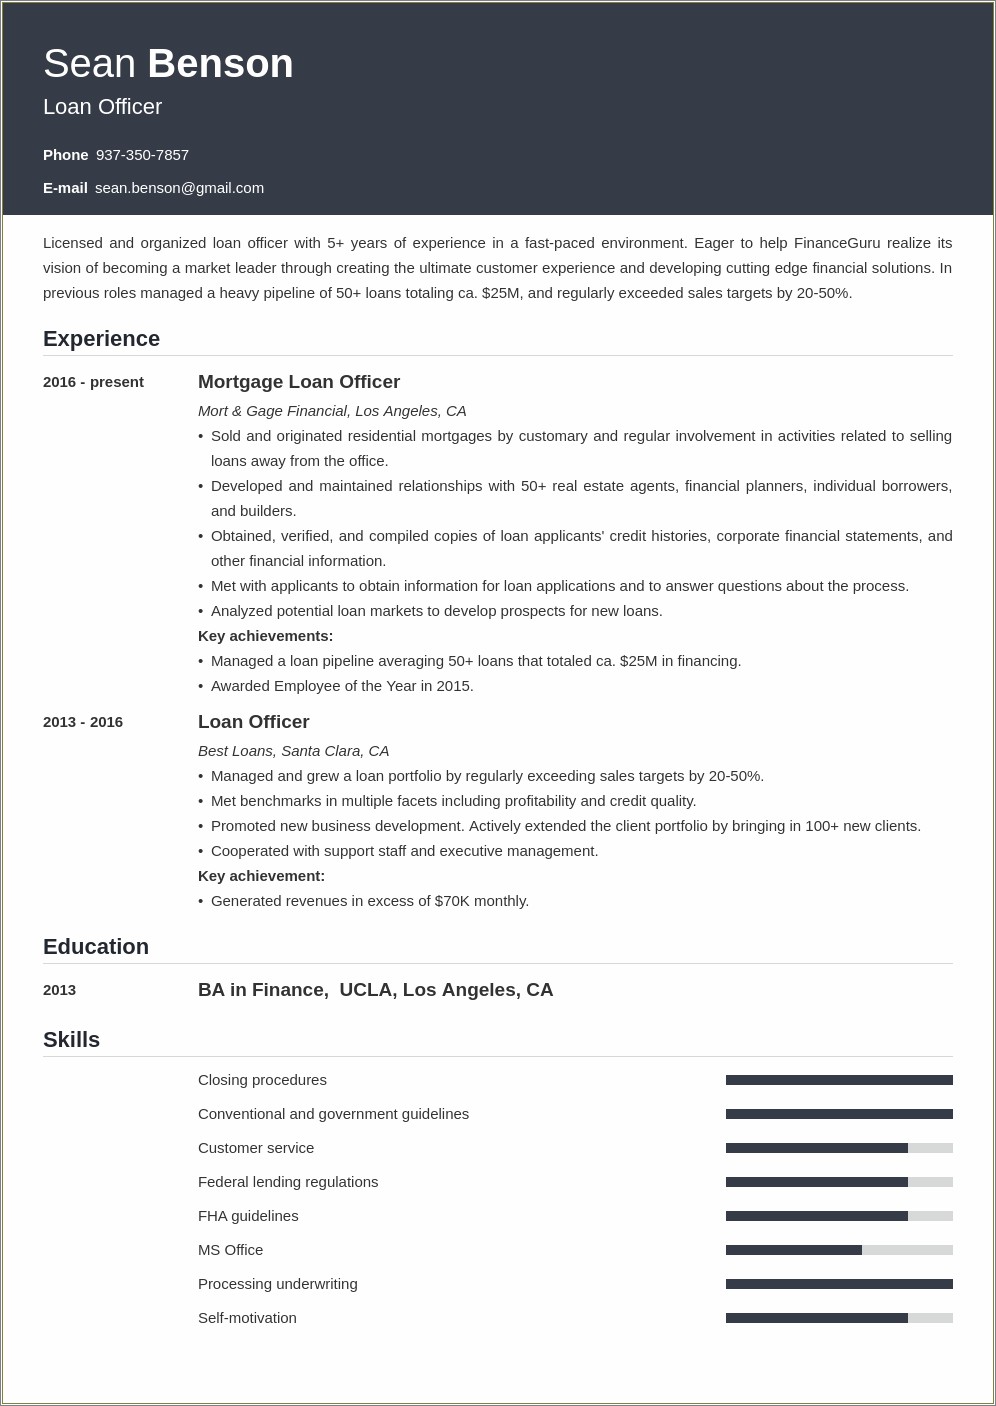 Payday Loan Job Description For Resume